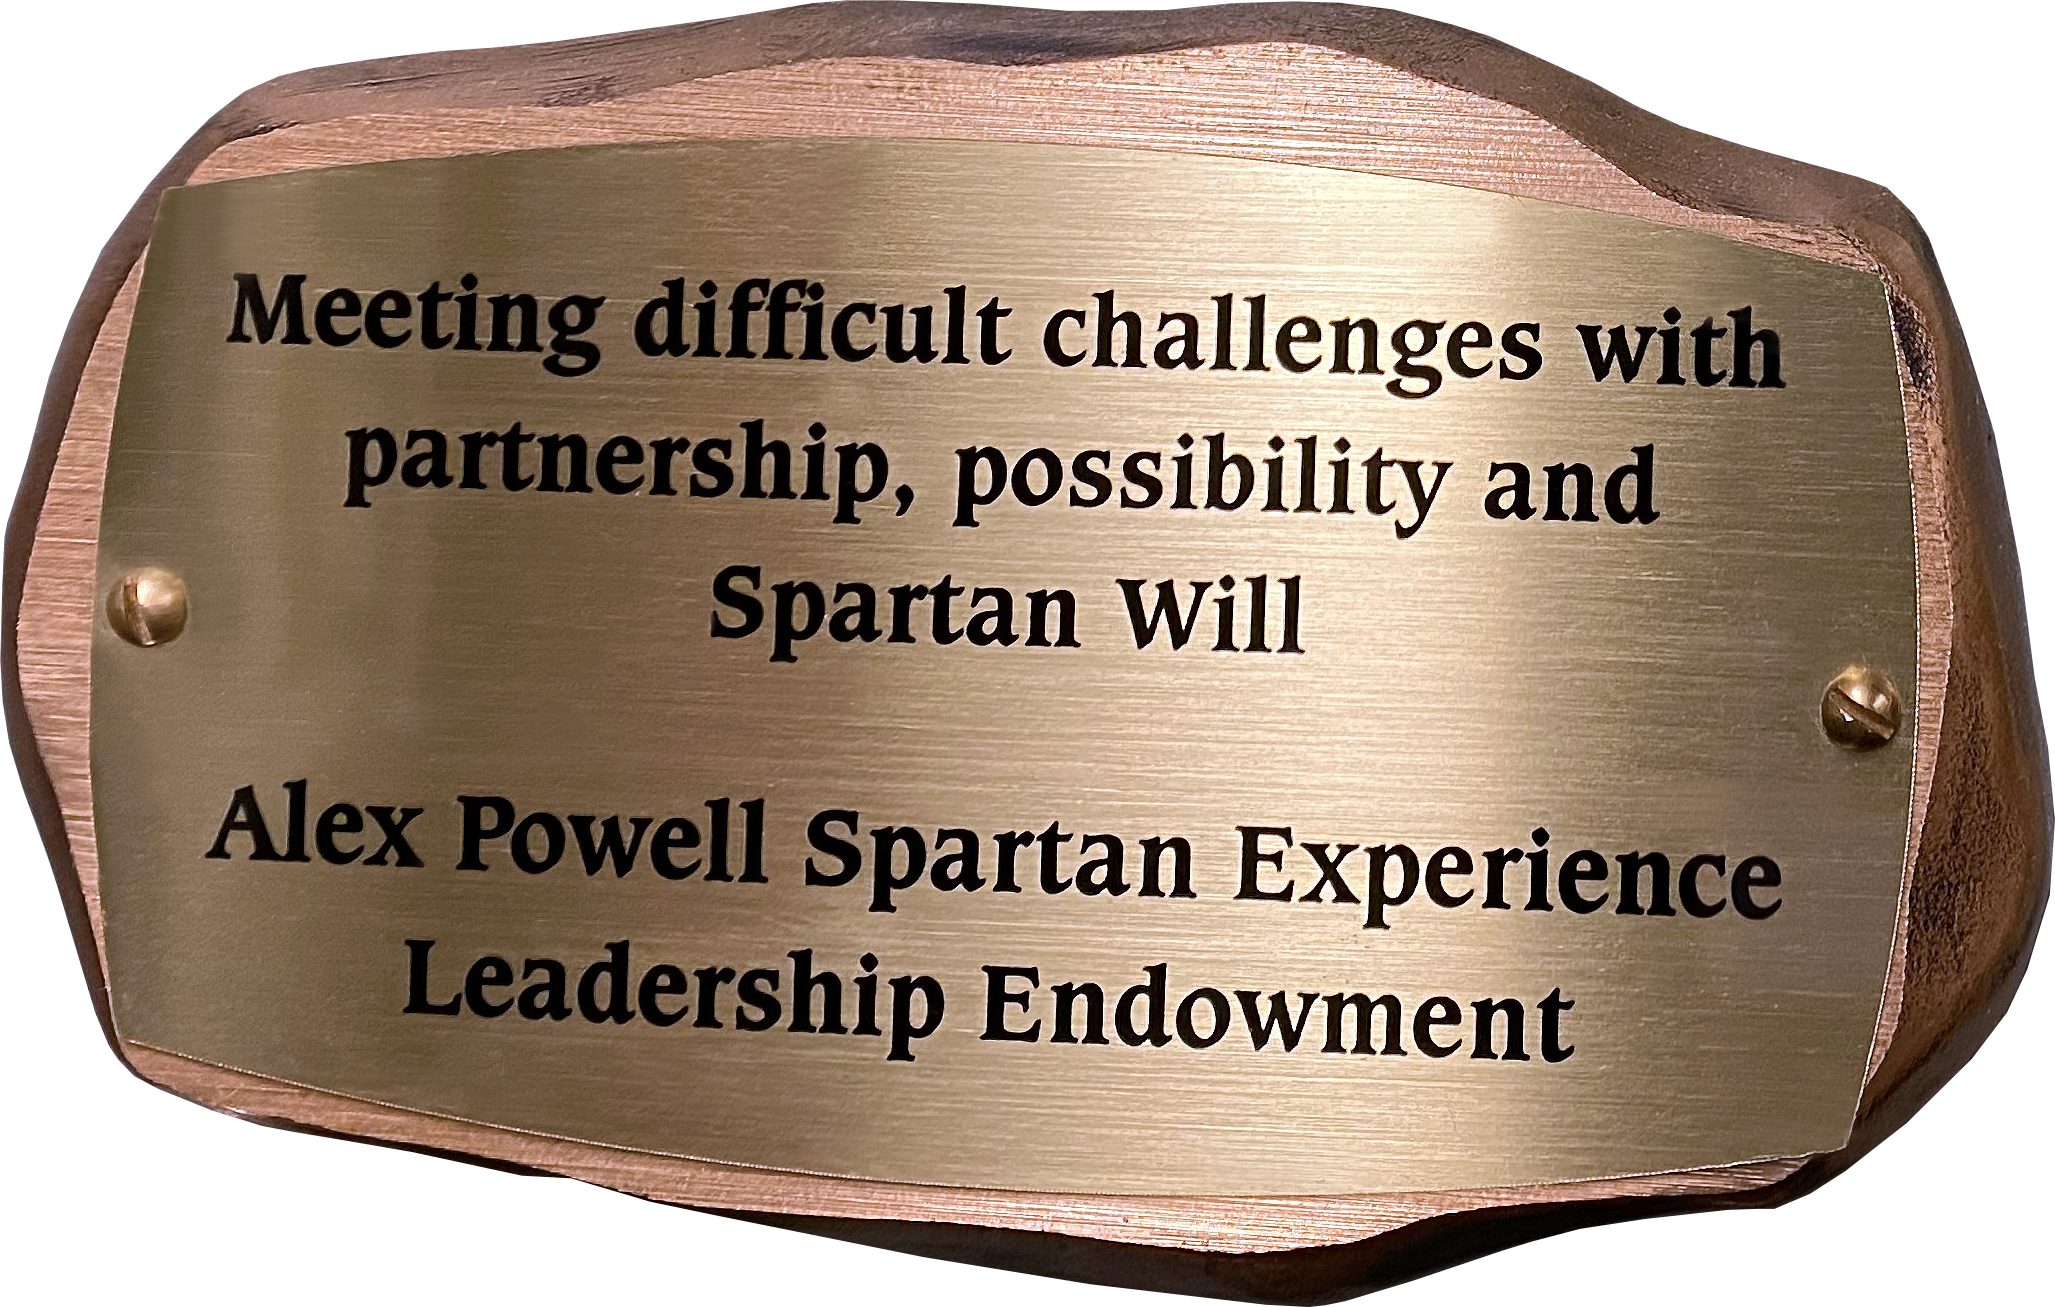 Alex Powell Spartan Experience Leadership Endowment